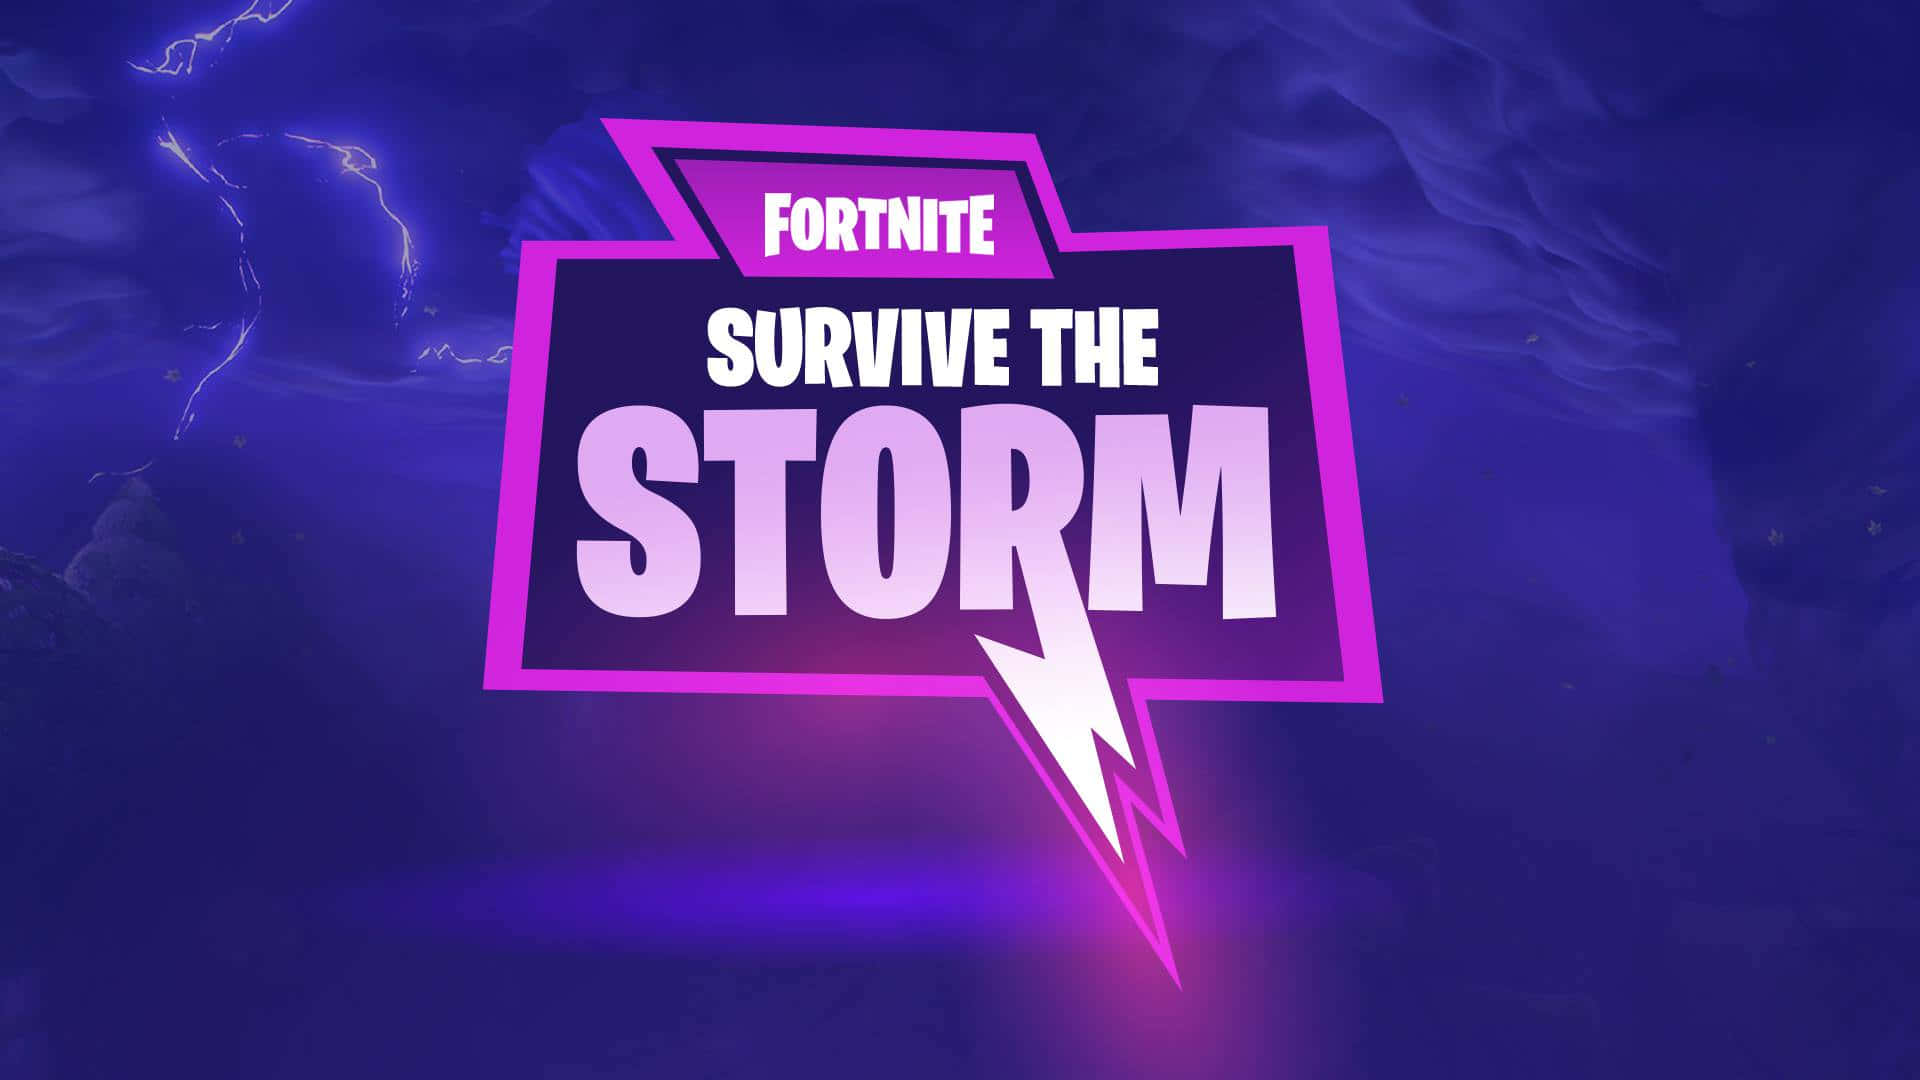 Cool Fortnite Logo Survive The Storm Wallpaper